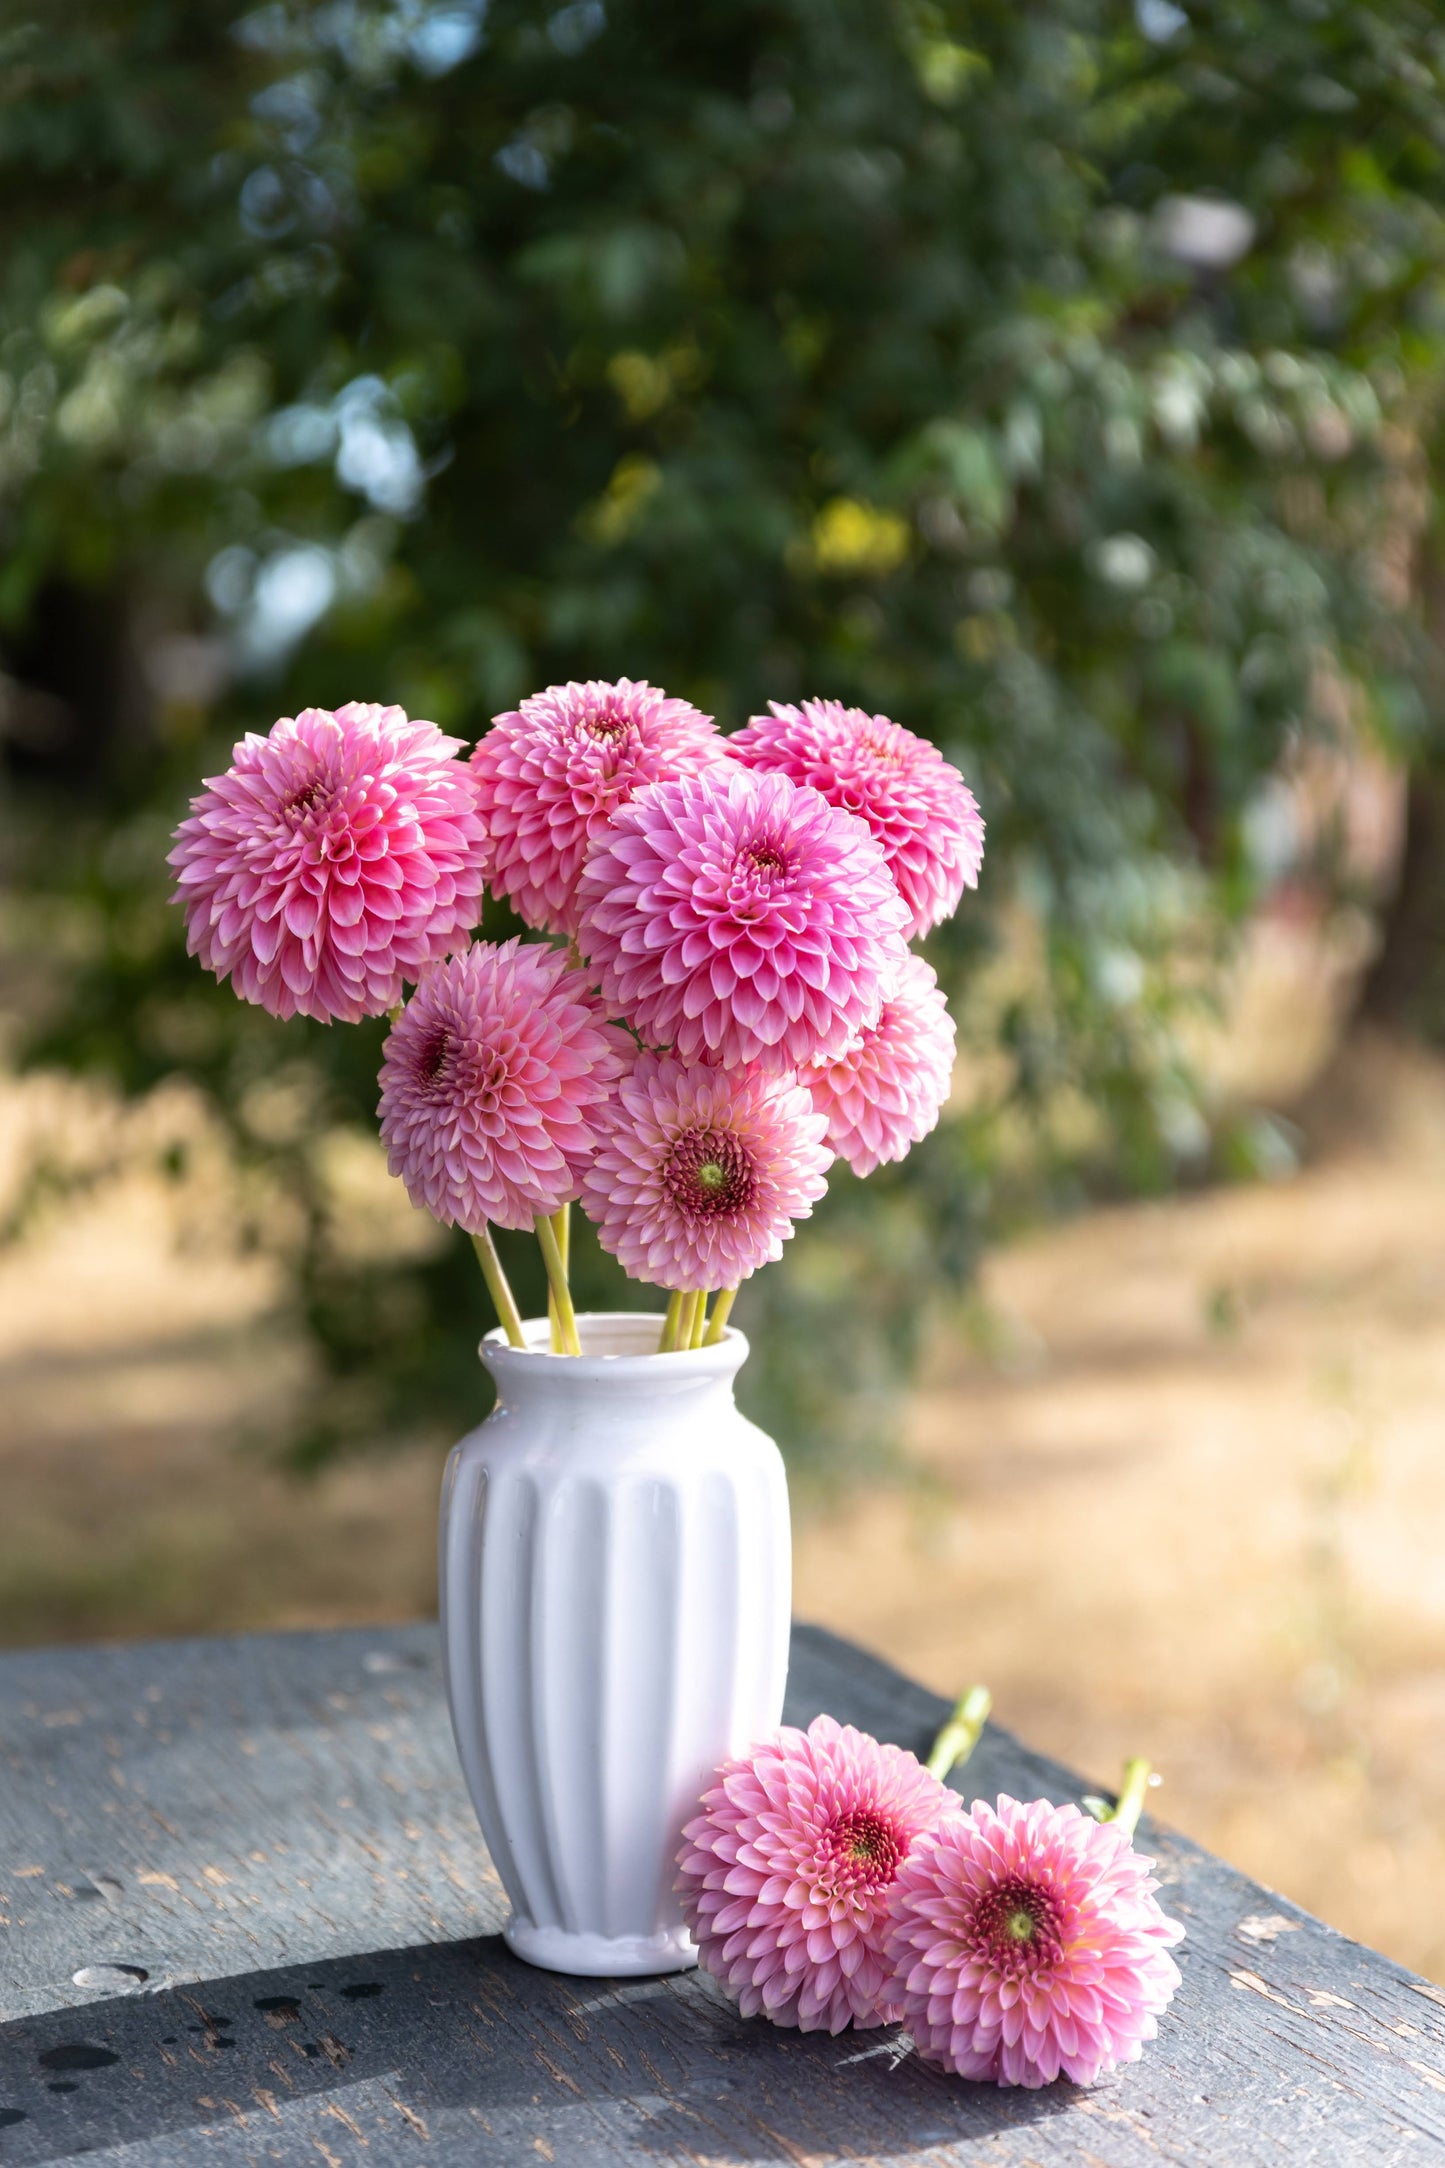 Bloomquist Pink Parfait Dahlia White Vase Tissue Culture Rooted Cutting